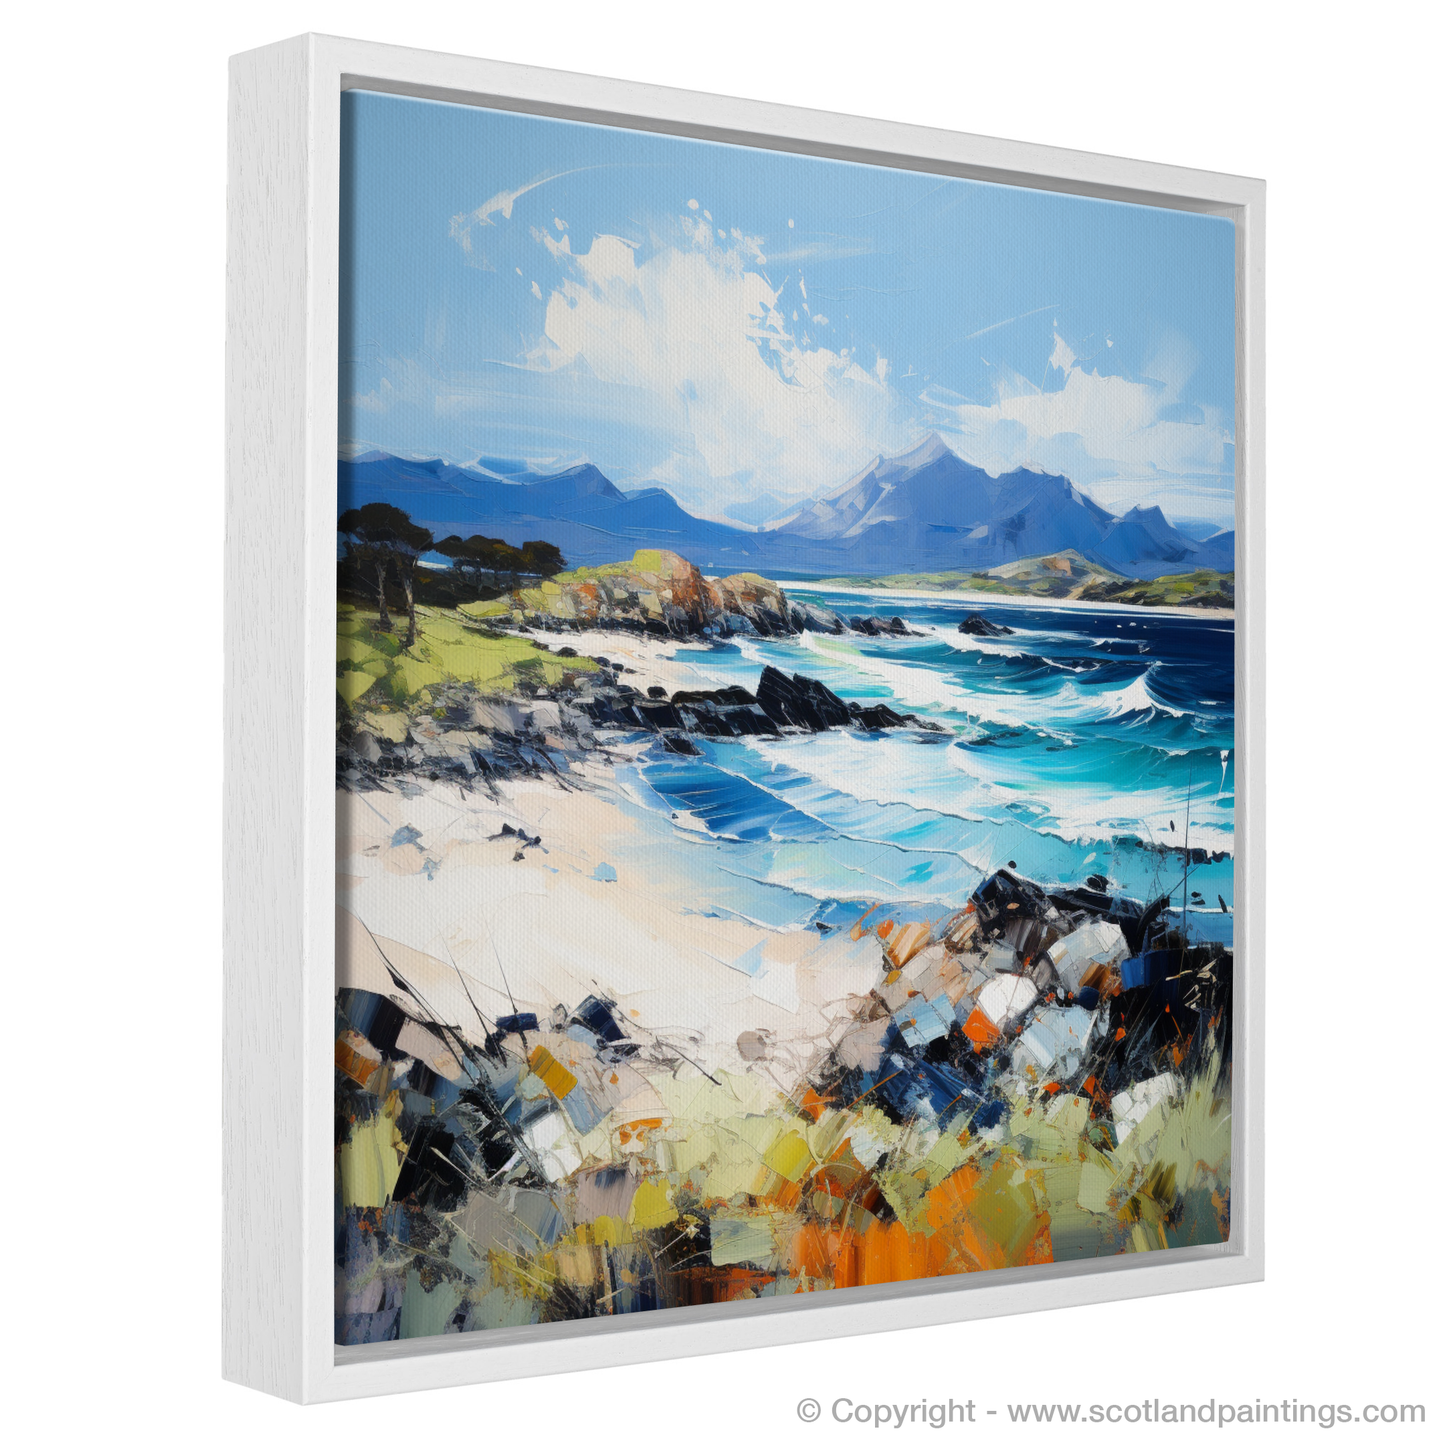 Painting and Art Print of Camusdarach Beach, Arisaig entitled "Wild Waves and Highland Gaze: An Expressionist Homage to Camusdarach Beach".